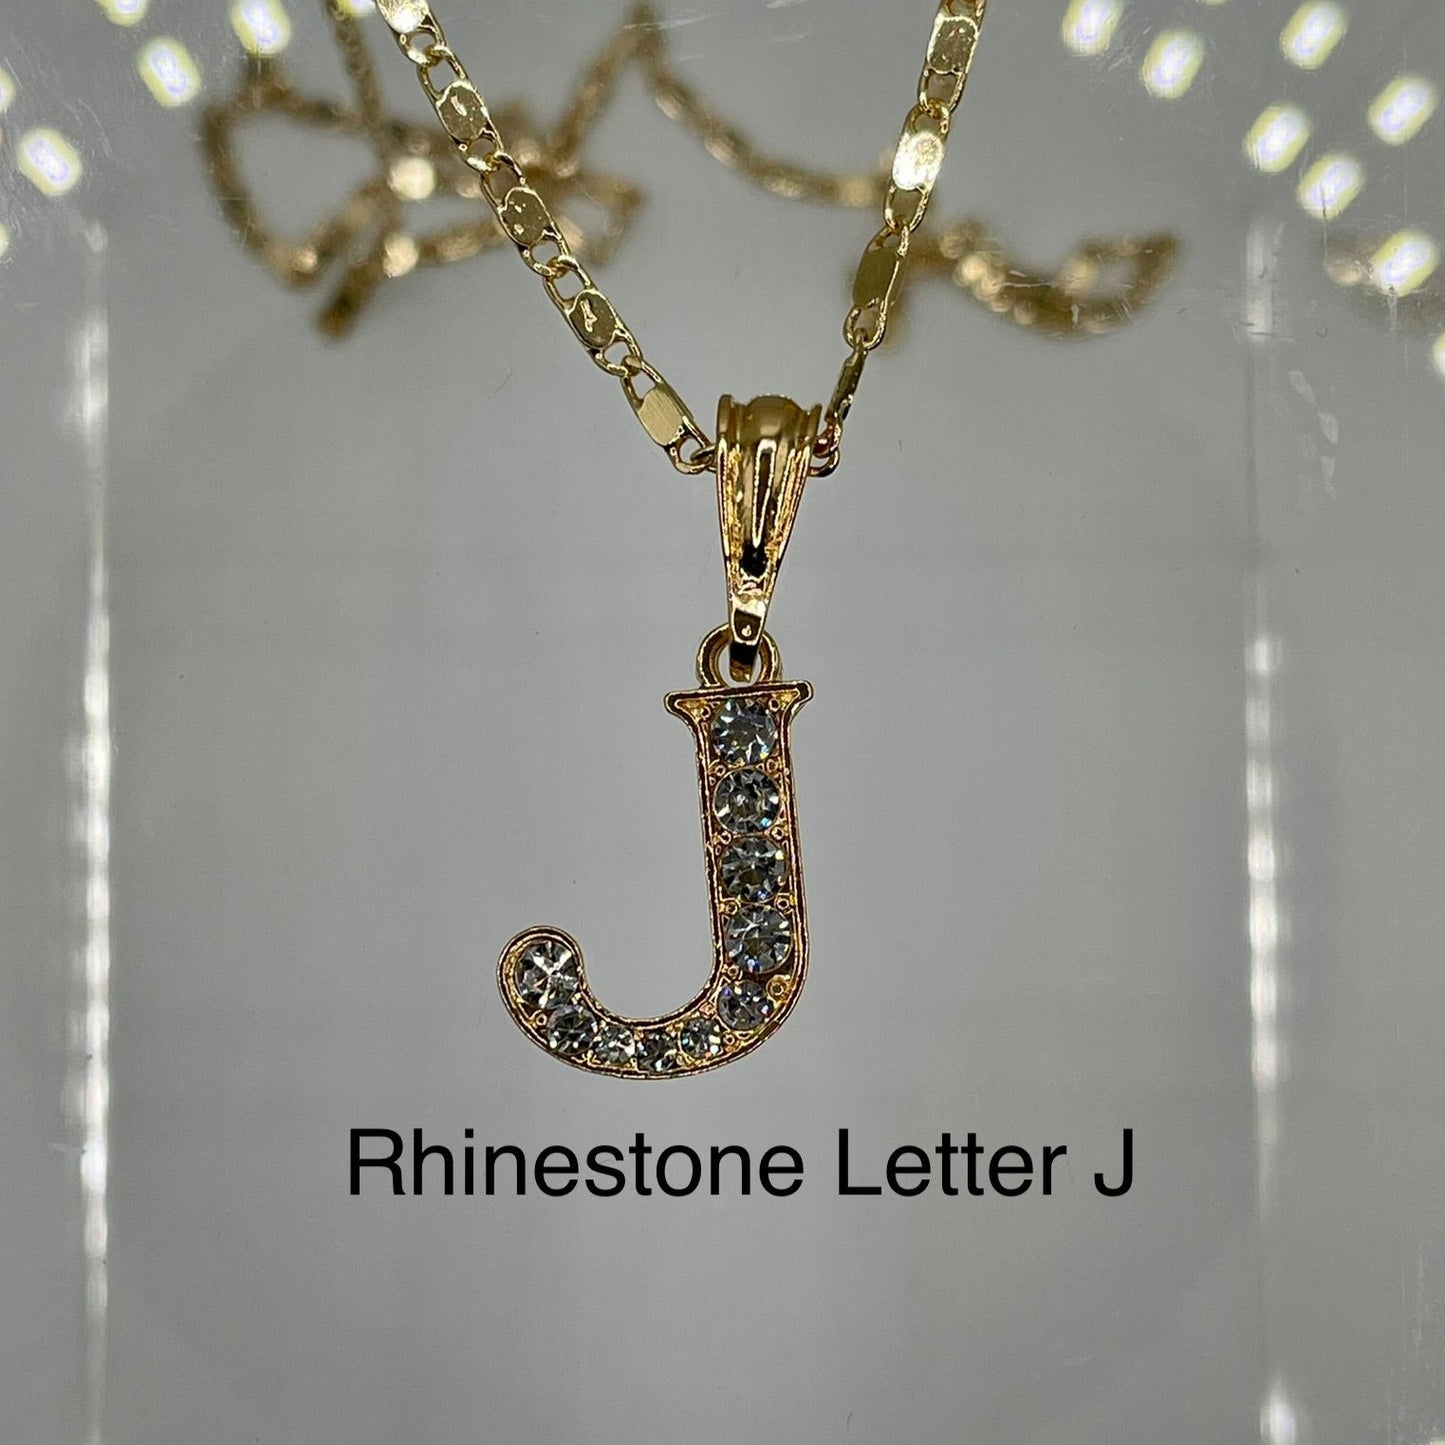 Rhinestone letter J pendant 14k gold plated on gold plated cute necklace. Letter pendants.